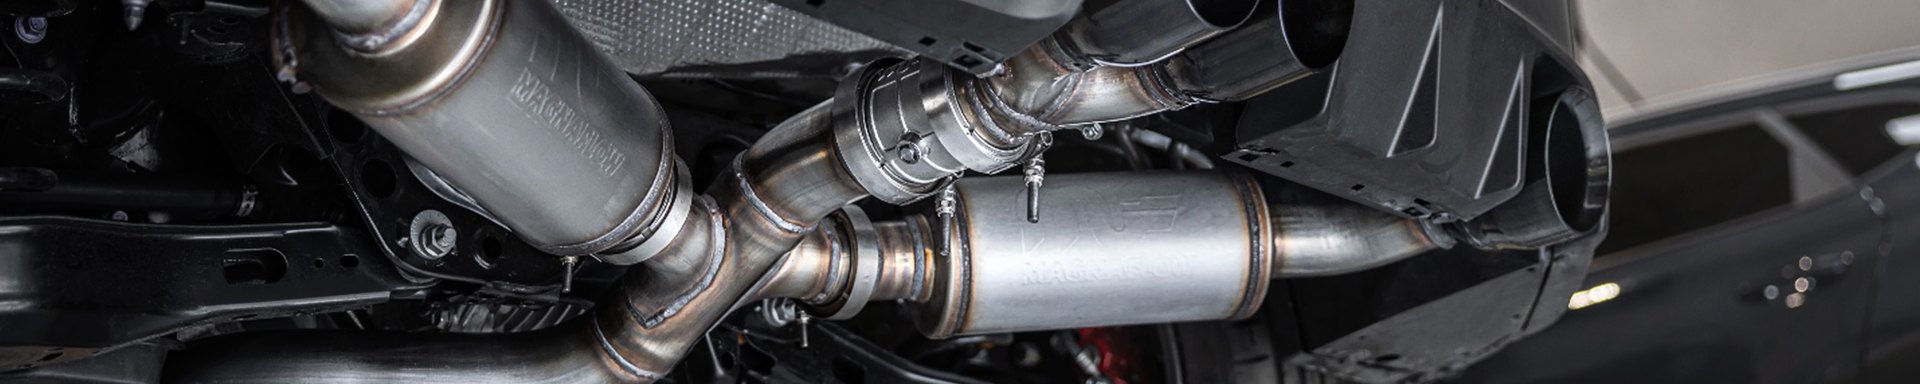 Kia Sedona Performance Exhaust Systems | Mufflers, Headers, Tips